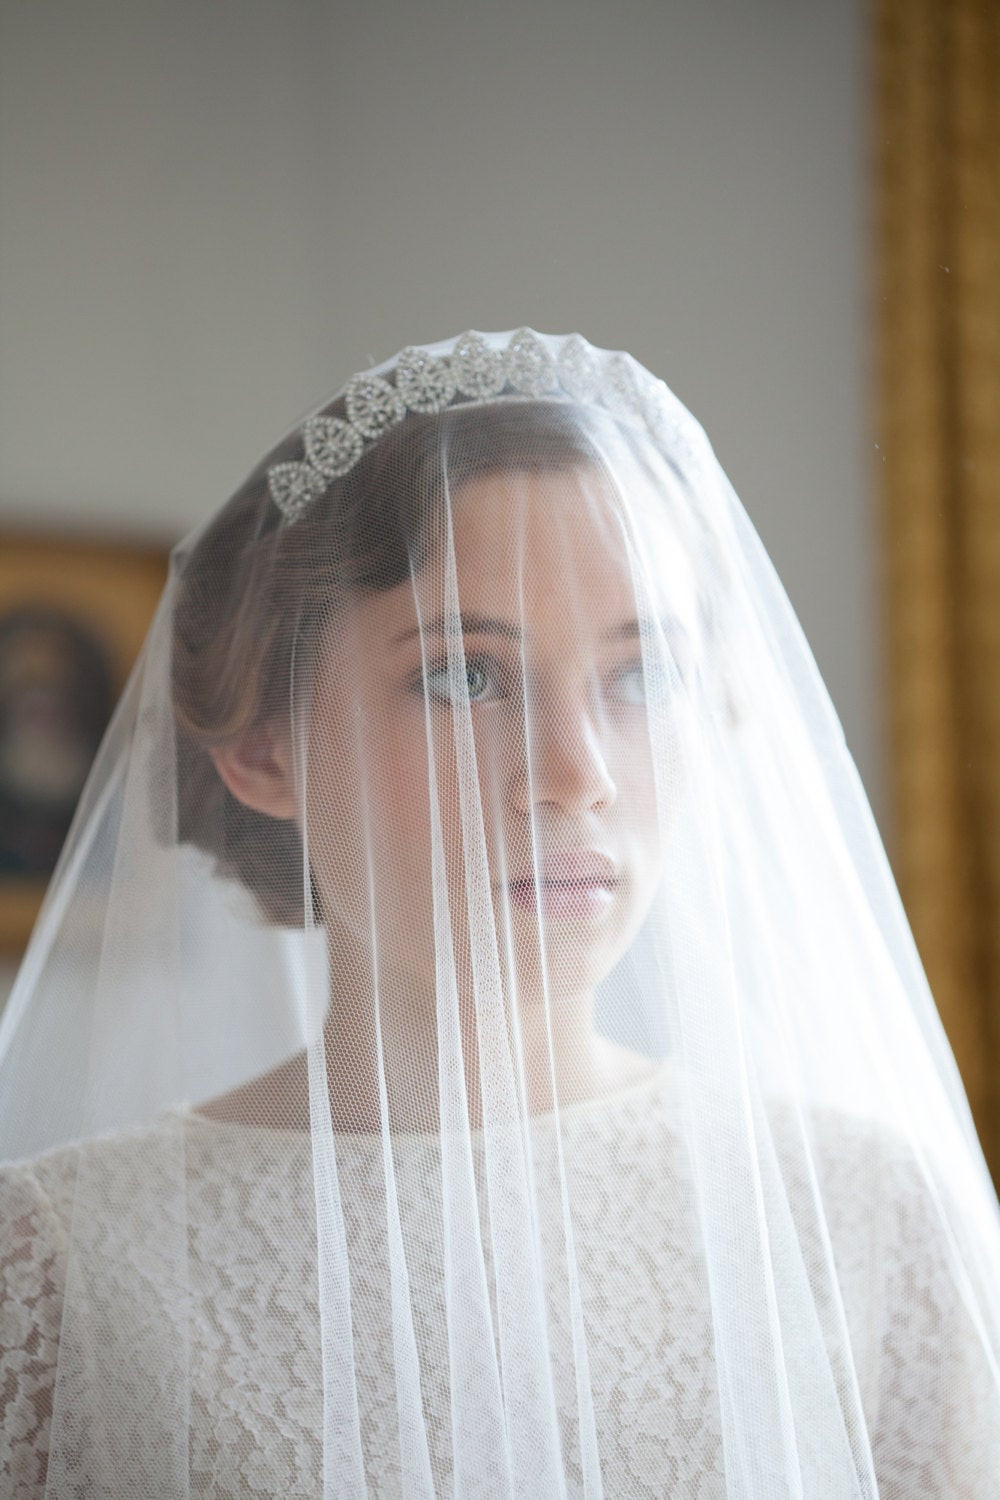 How To Make A Wedding Veil With A Tiara
 Vintage Wedding Veil and Tiara Bridal Crown Antique style